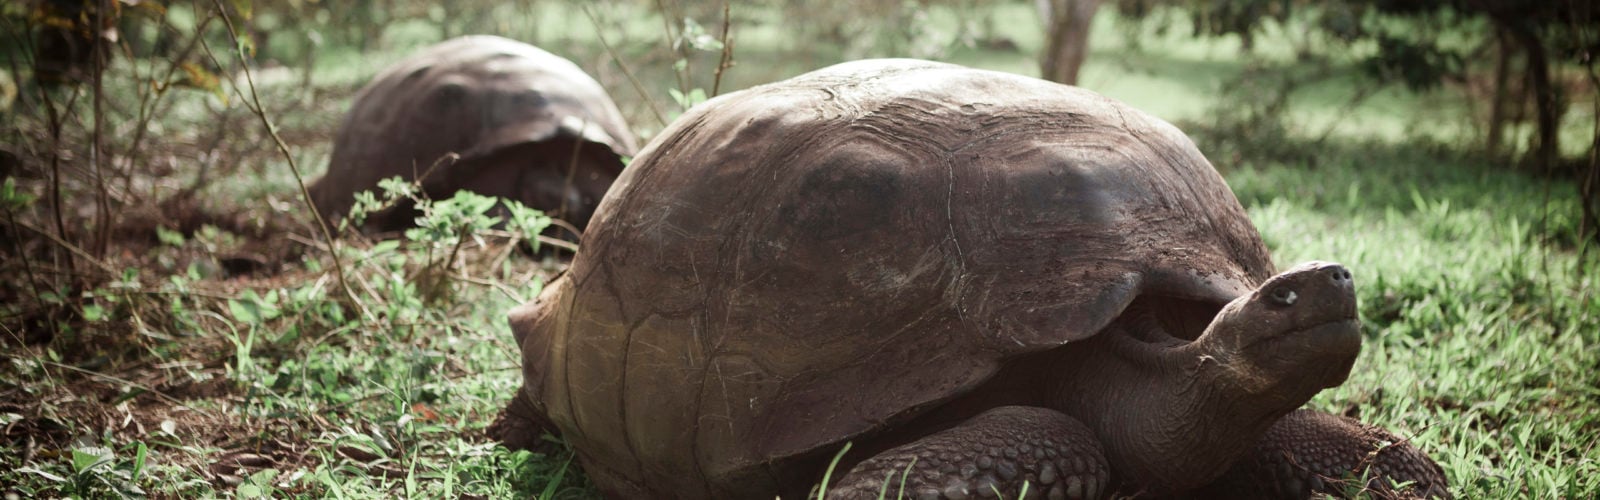 giant-tortoises-santa-cruz-galapagos-islands